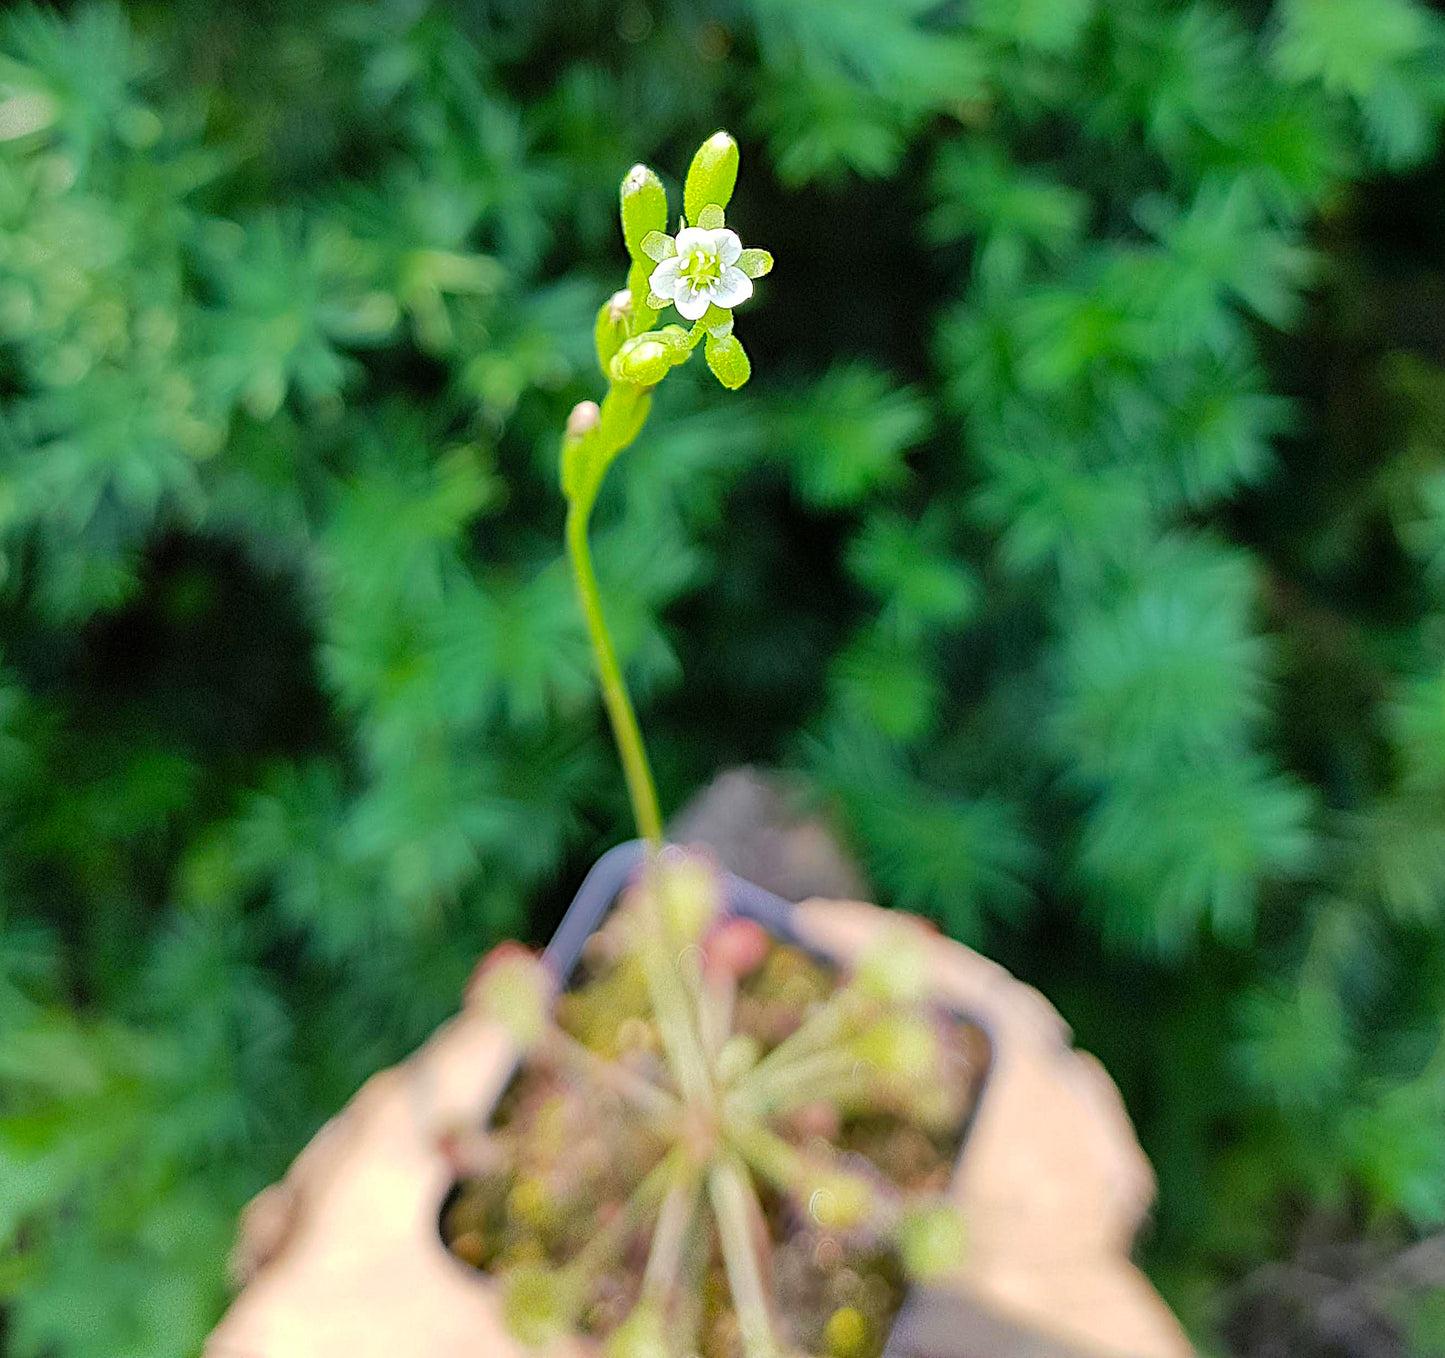 Drosera Rotundifolia, Sundew, Live plant